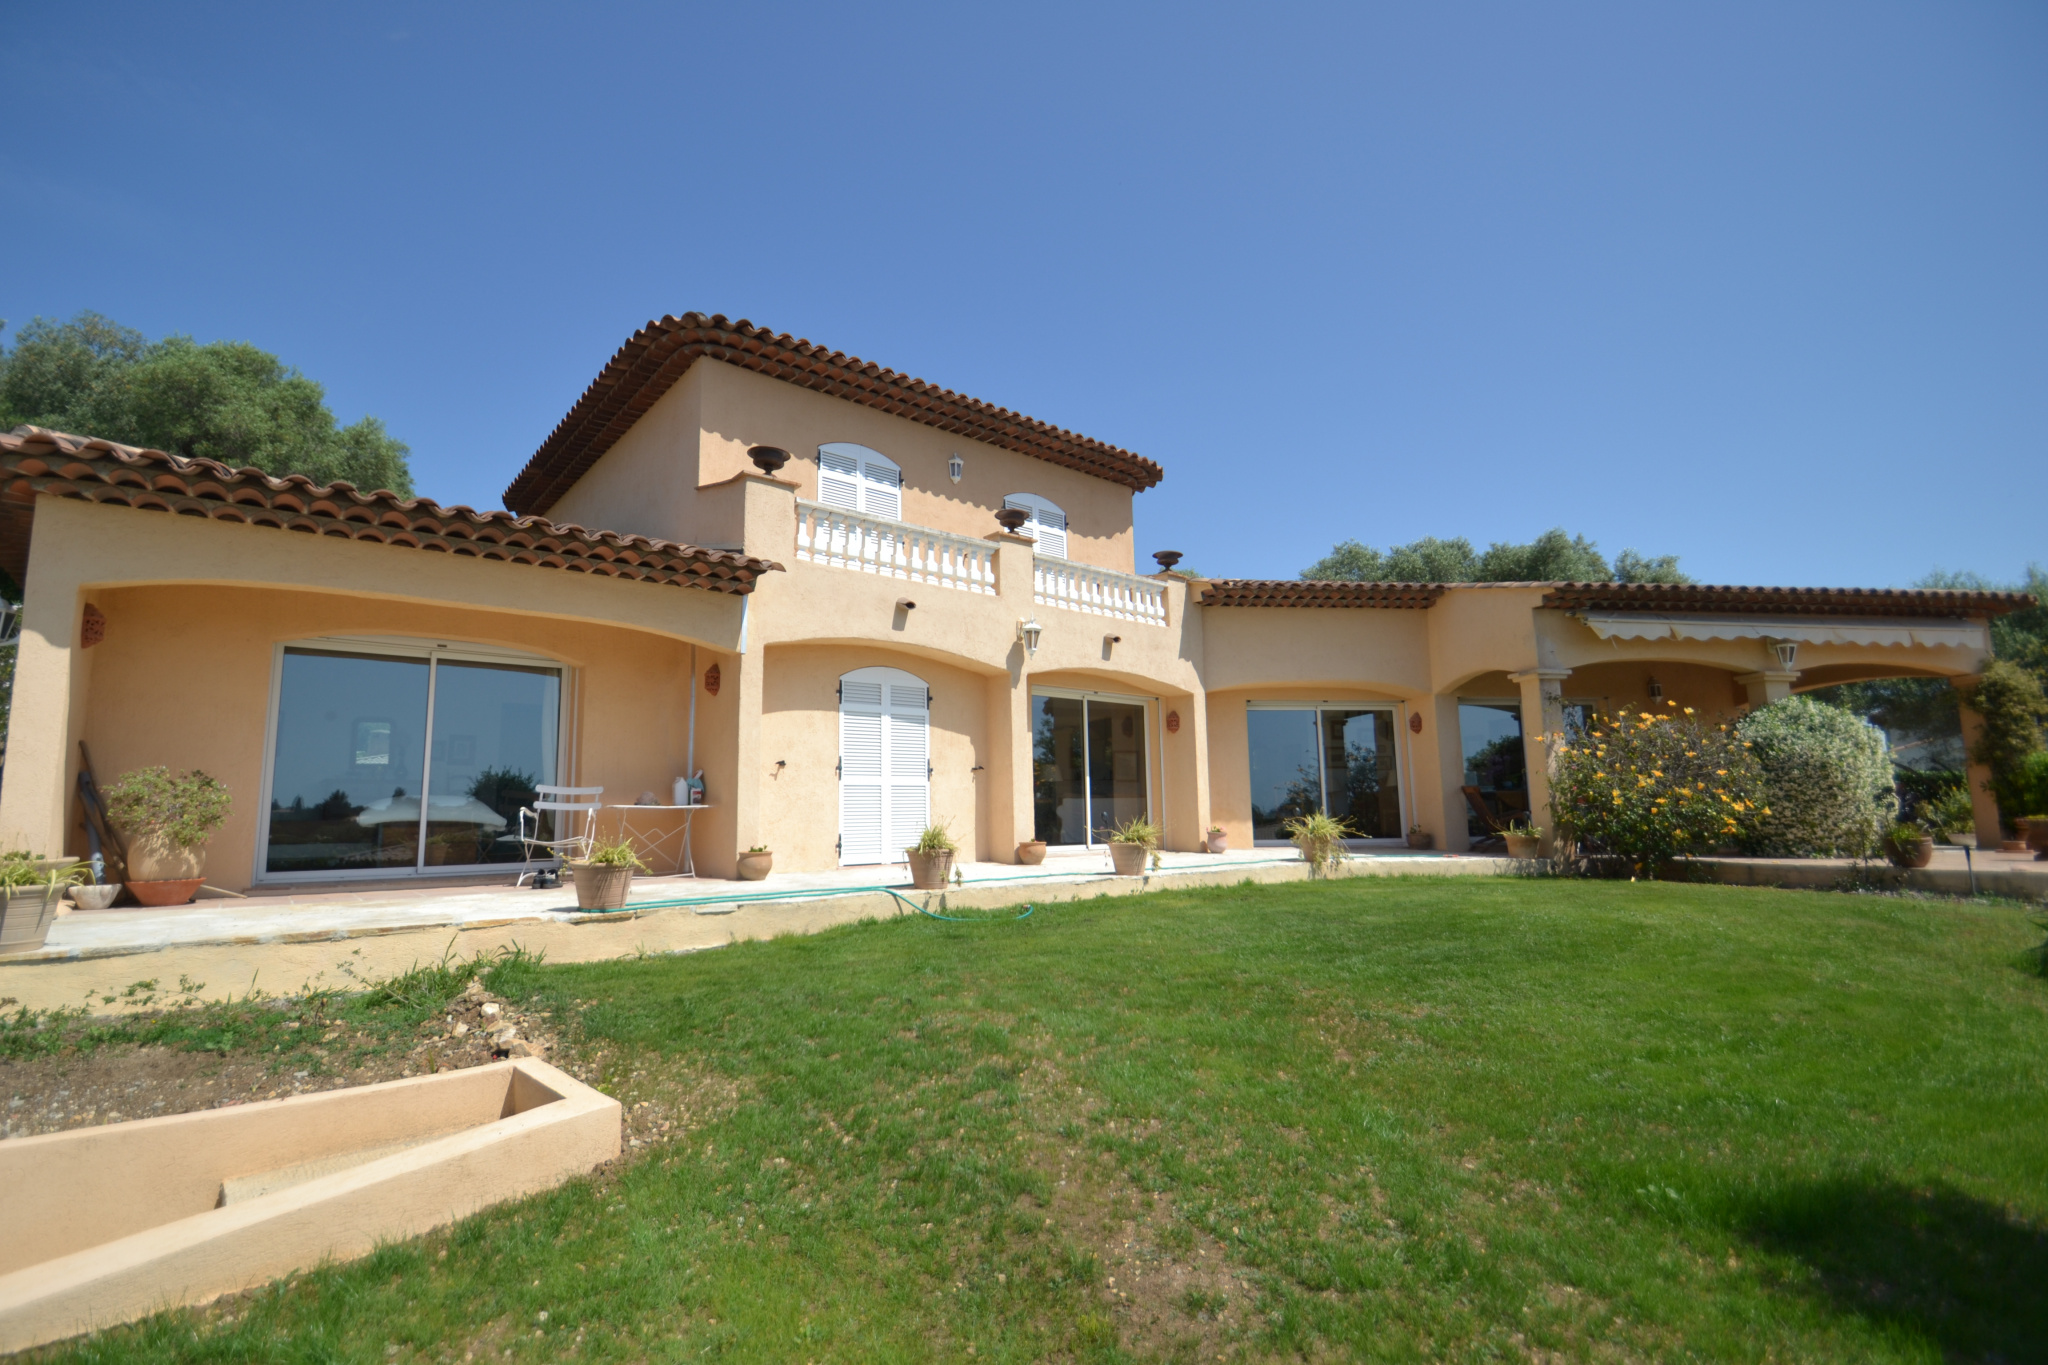 Vente Maison 200m² 6 Pièces à Antibes (06600) - Agence Avenir Immobilier International